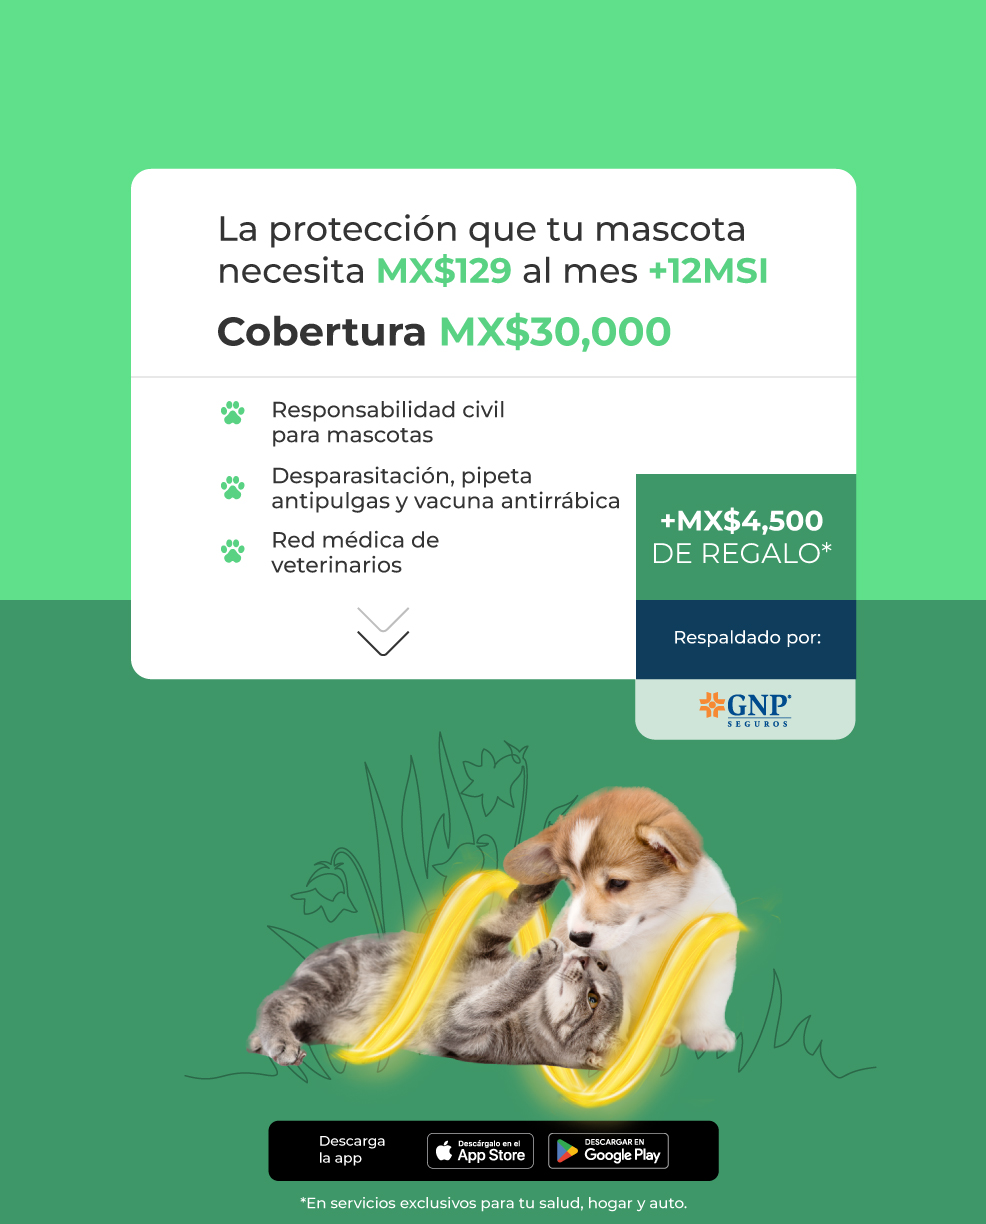 Protege a tu mascota desde MX$129 al mes con GNP